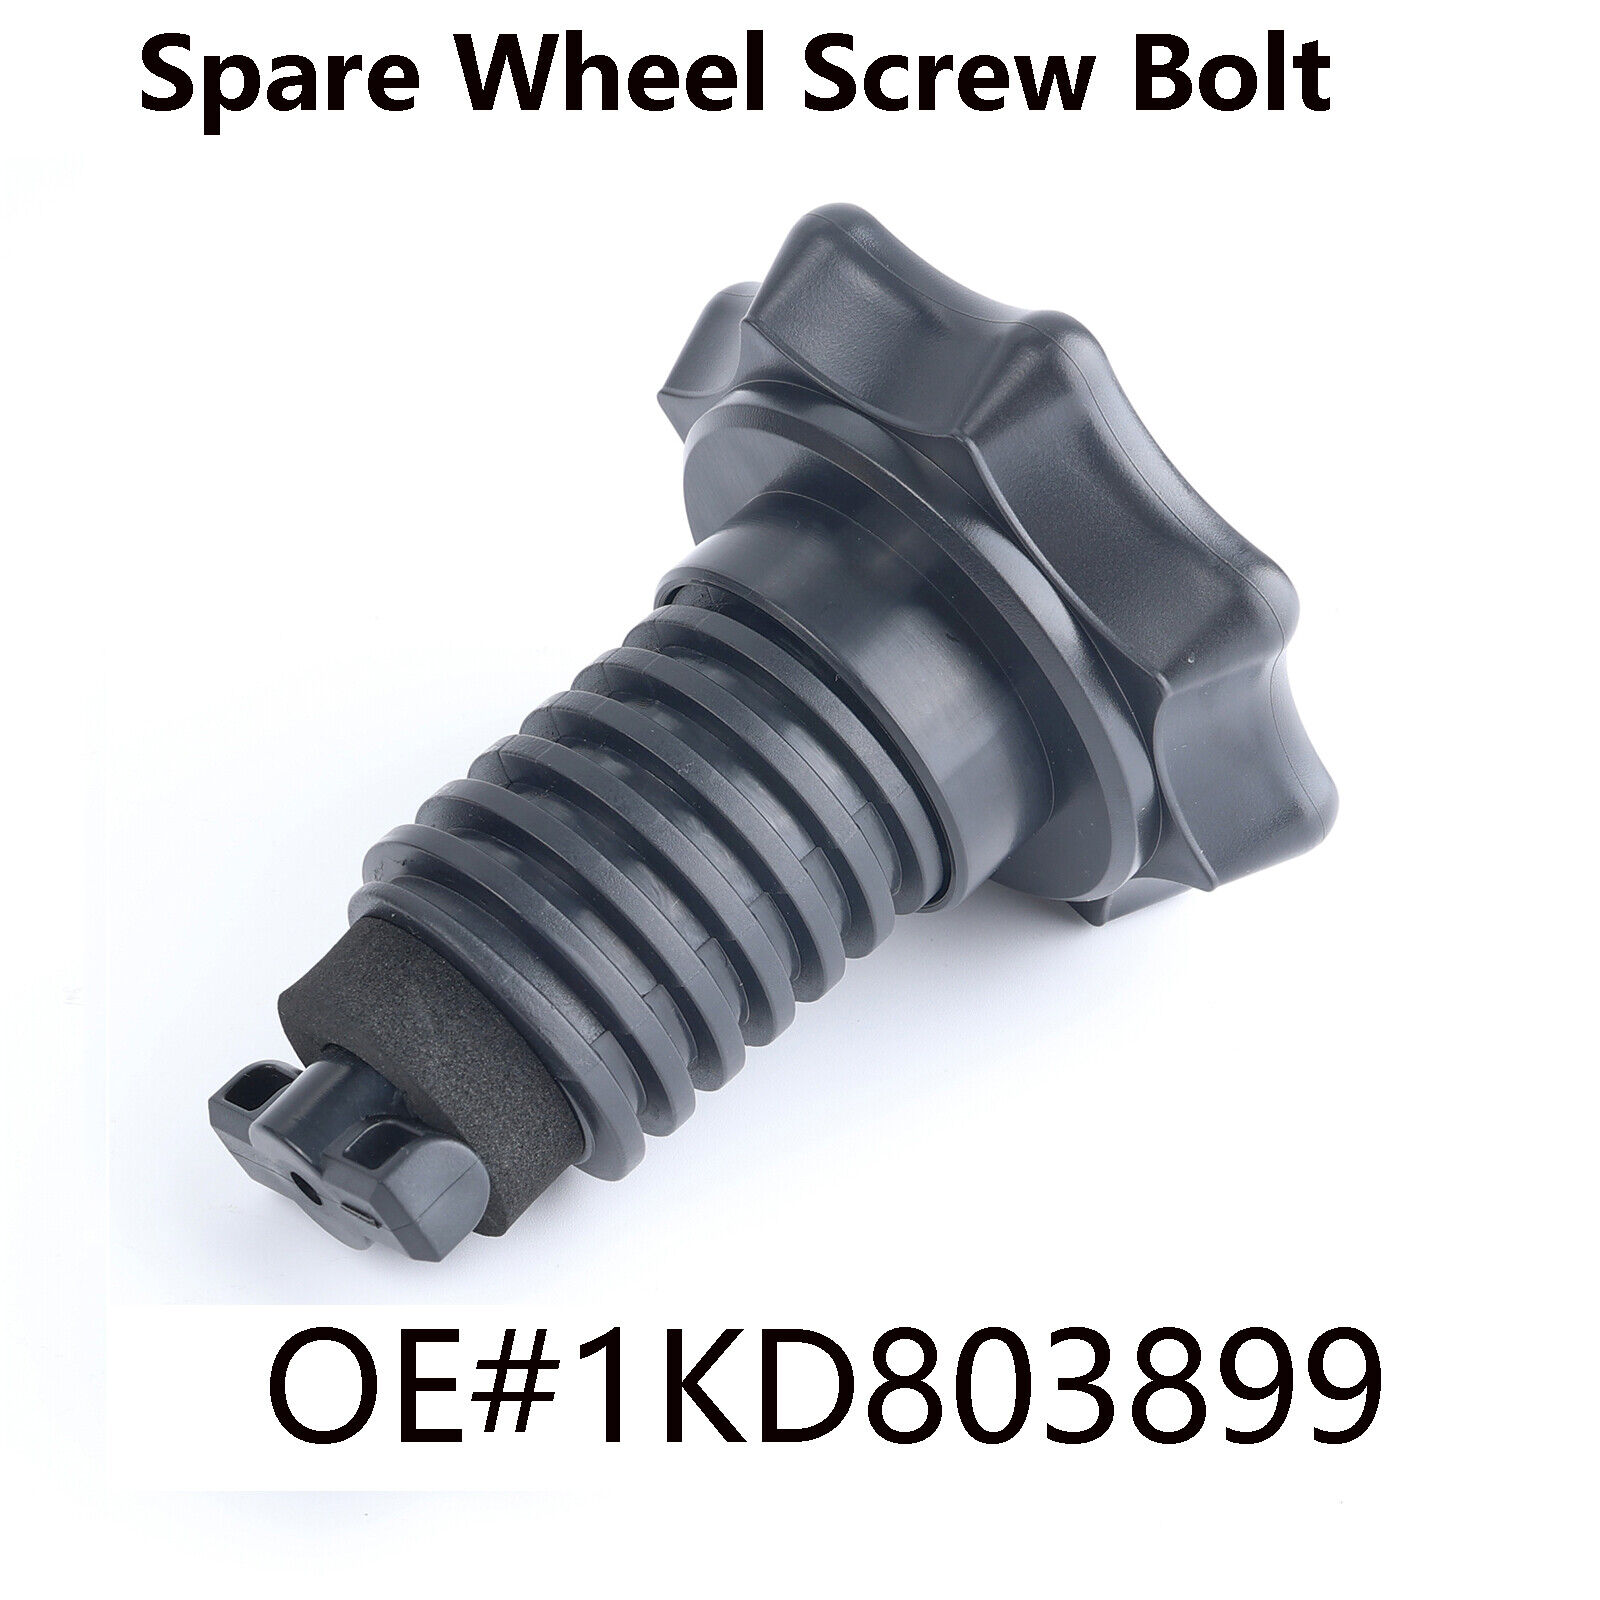 1Pcs For SKODA Octavia 1Z Superb B6 Spare Tire Hold Fixing Mounting Screw Bolt